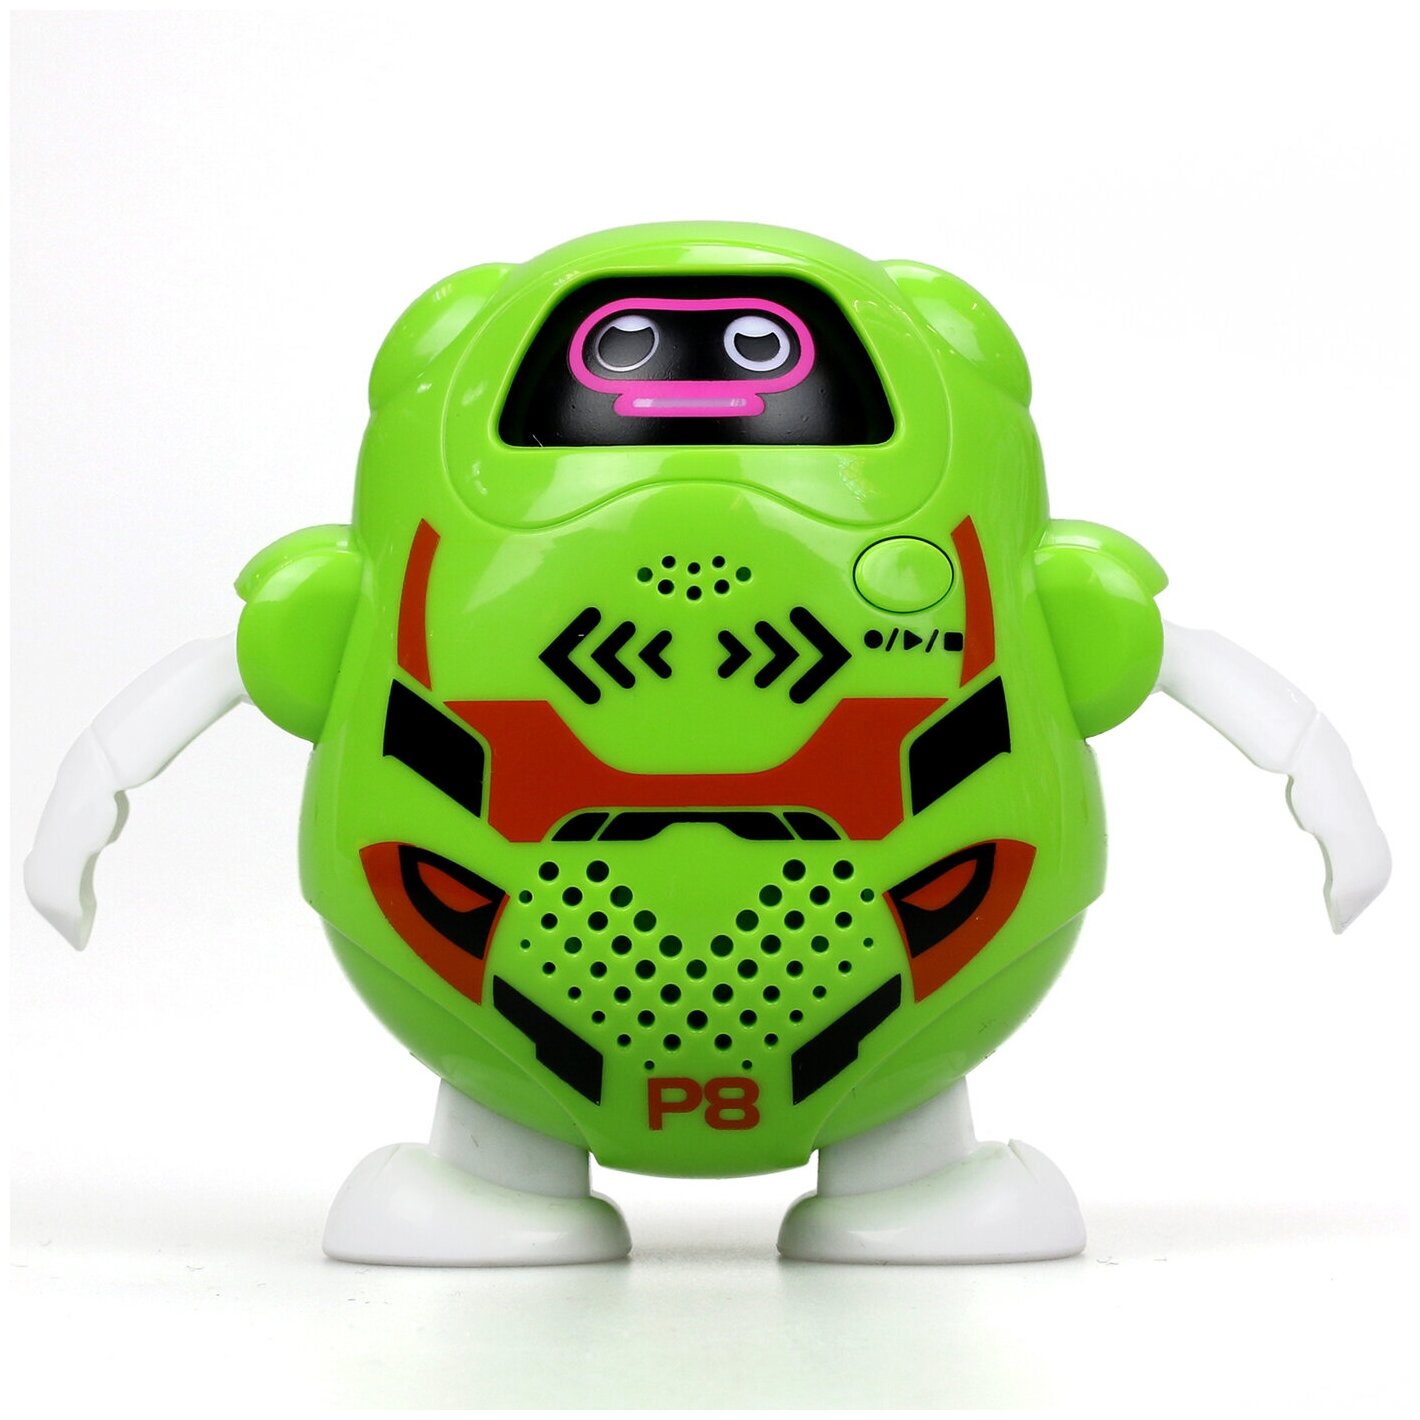 Silverlit Робот Токибо цвет зеленый